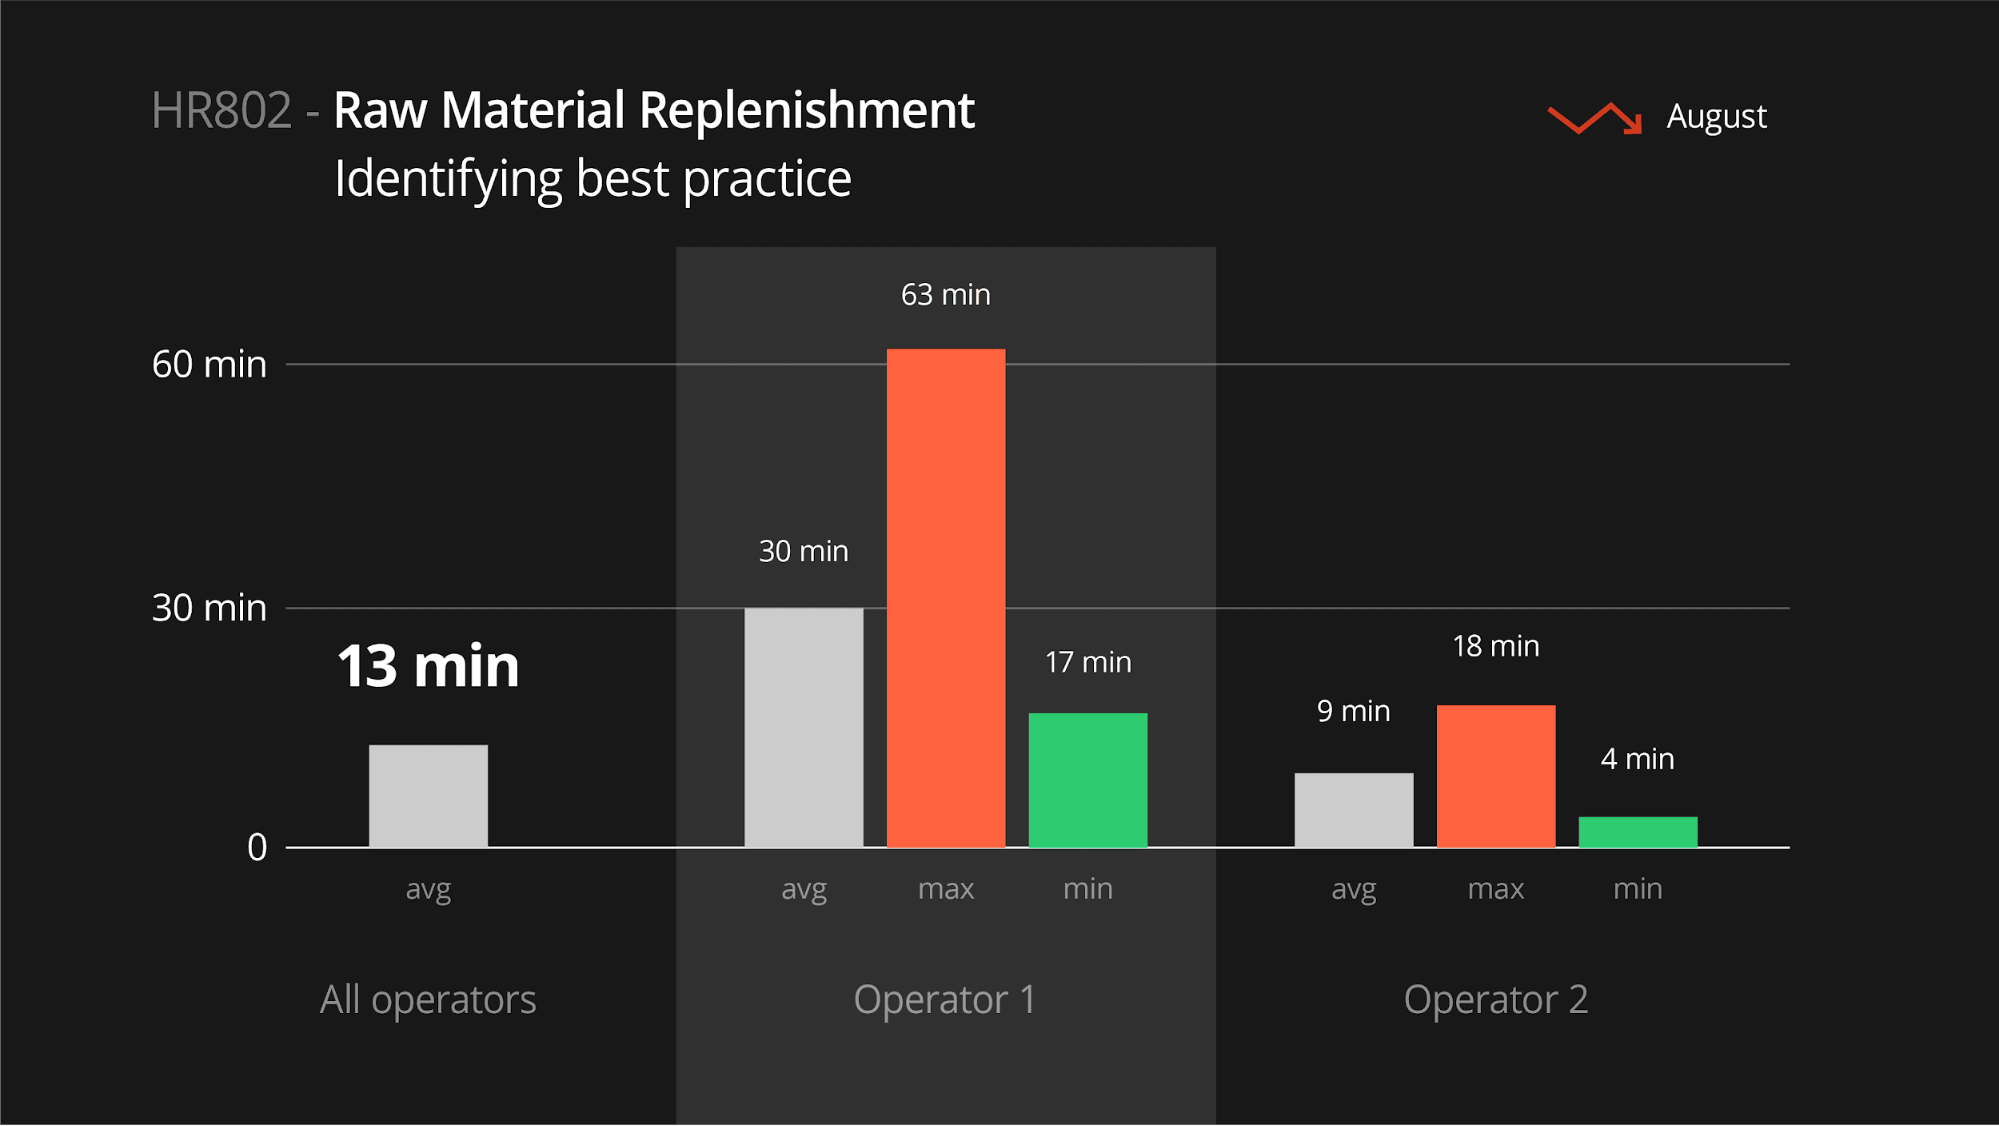 comparison of raw material replenishment time